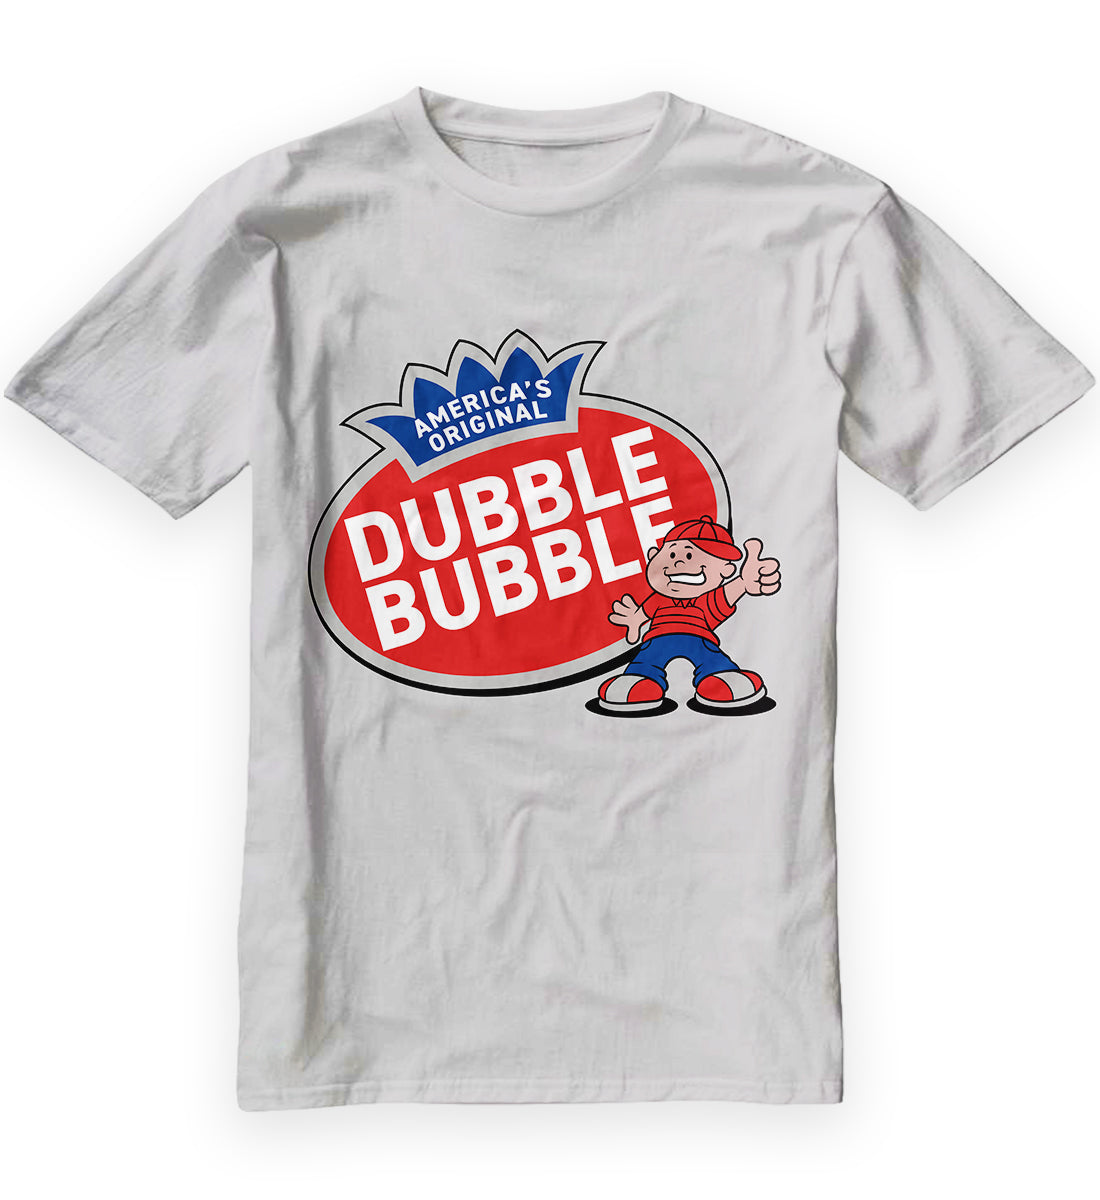 Bubblegum Kids